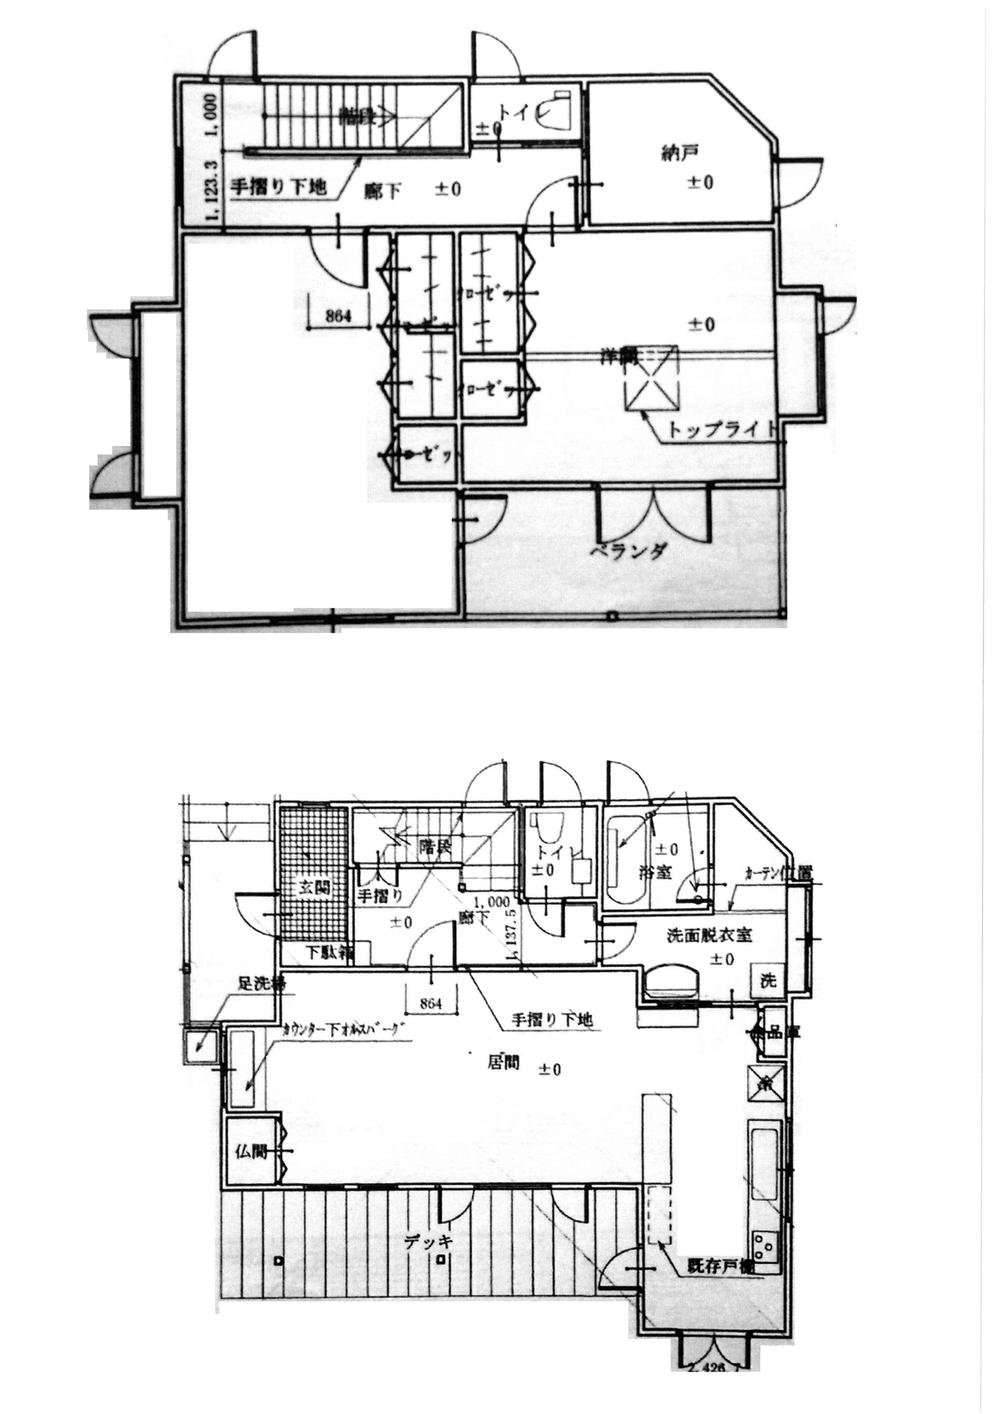 Floor plan. 14.8 million yen, 2LDK + S (storeroom), Land area 180.38 sq m , Building area 127.7 sq m